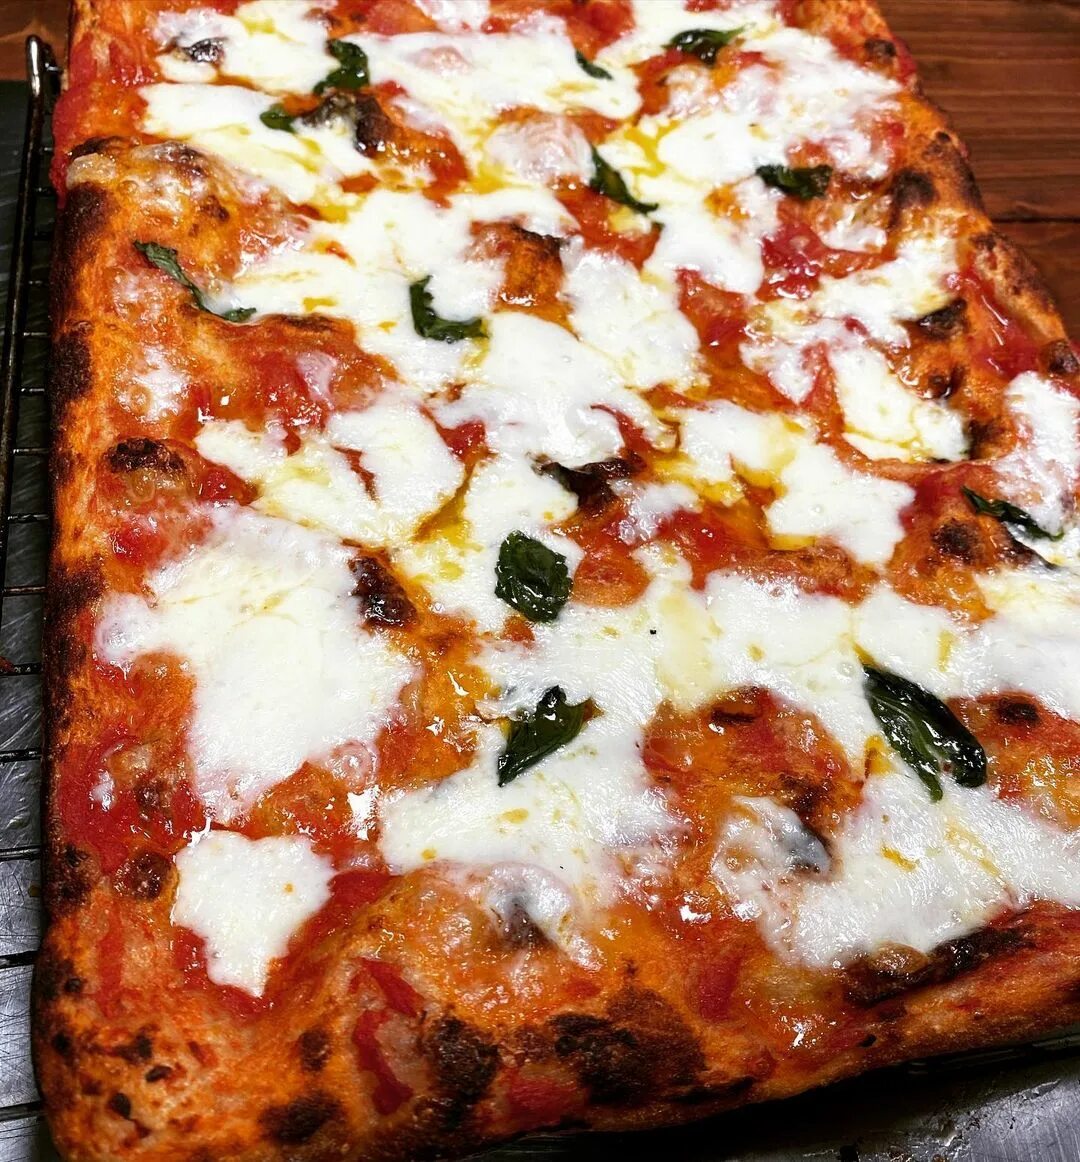 пицца повар ру в духовке фото 69